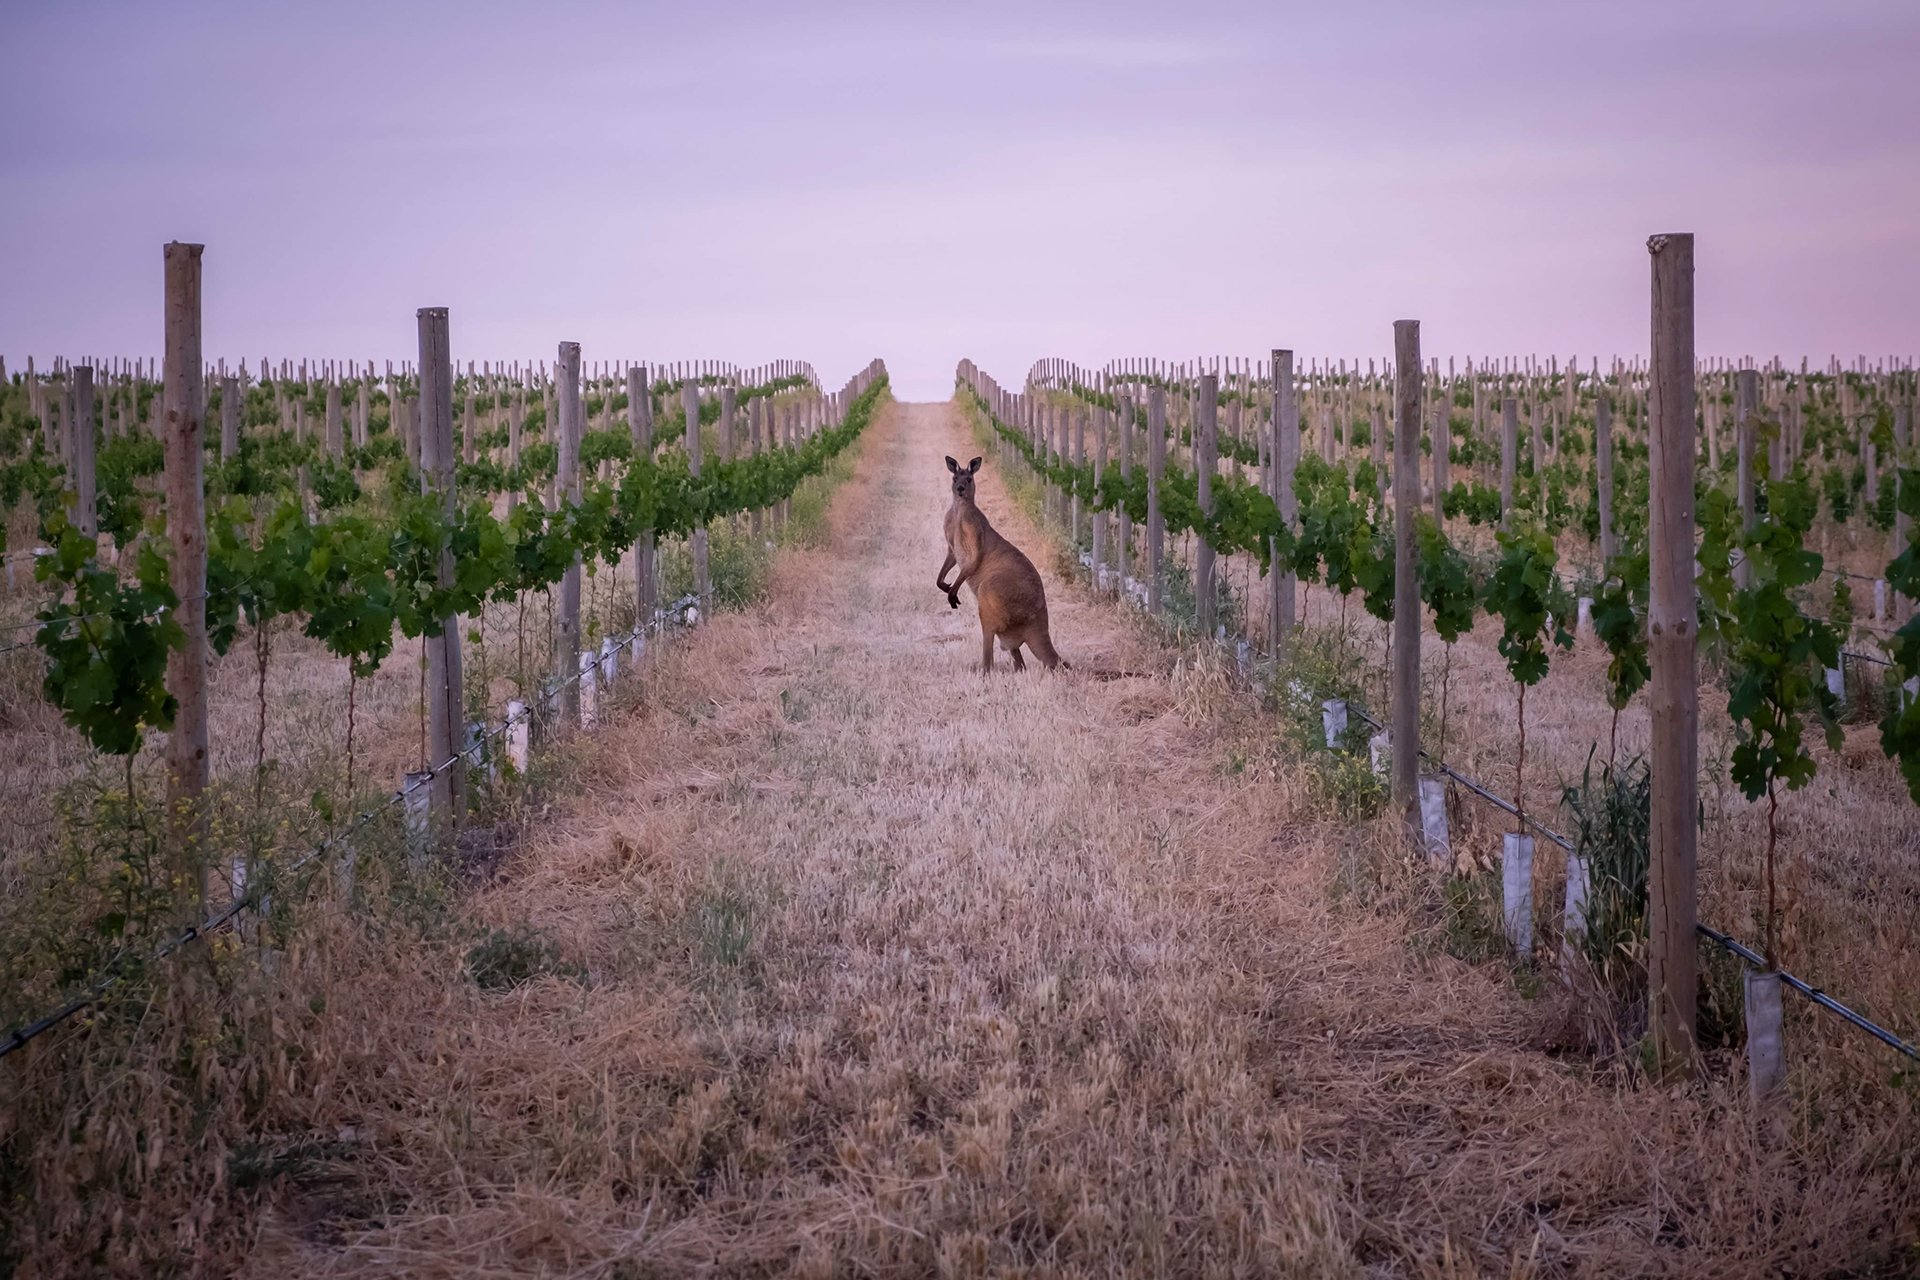 Vines (and a kangaroo) in Barossa, Australia.